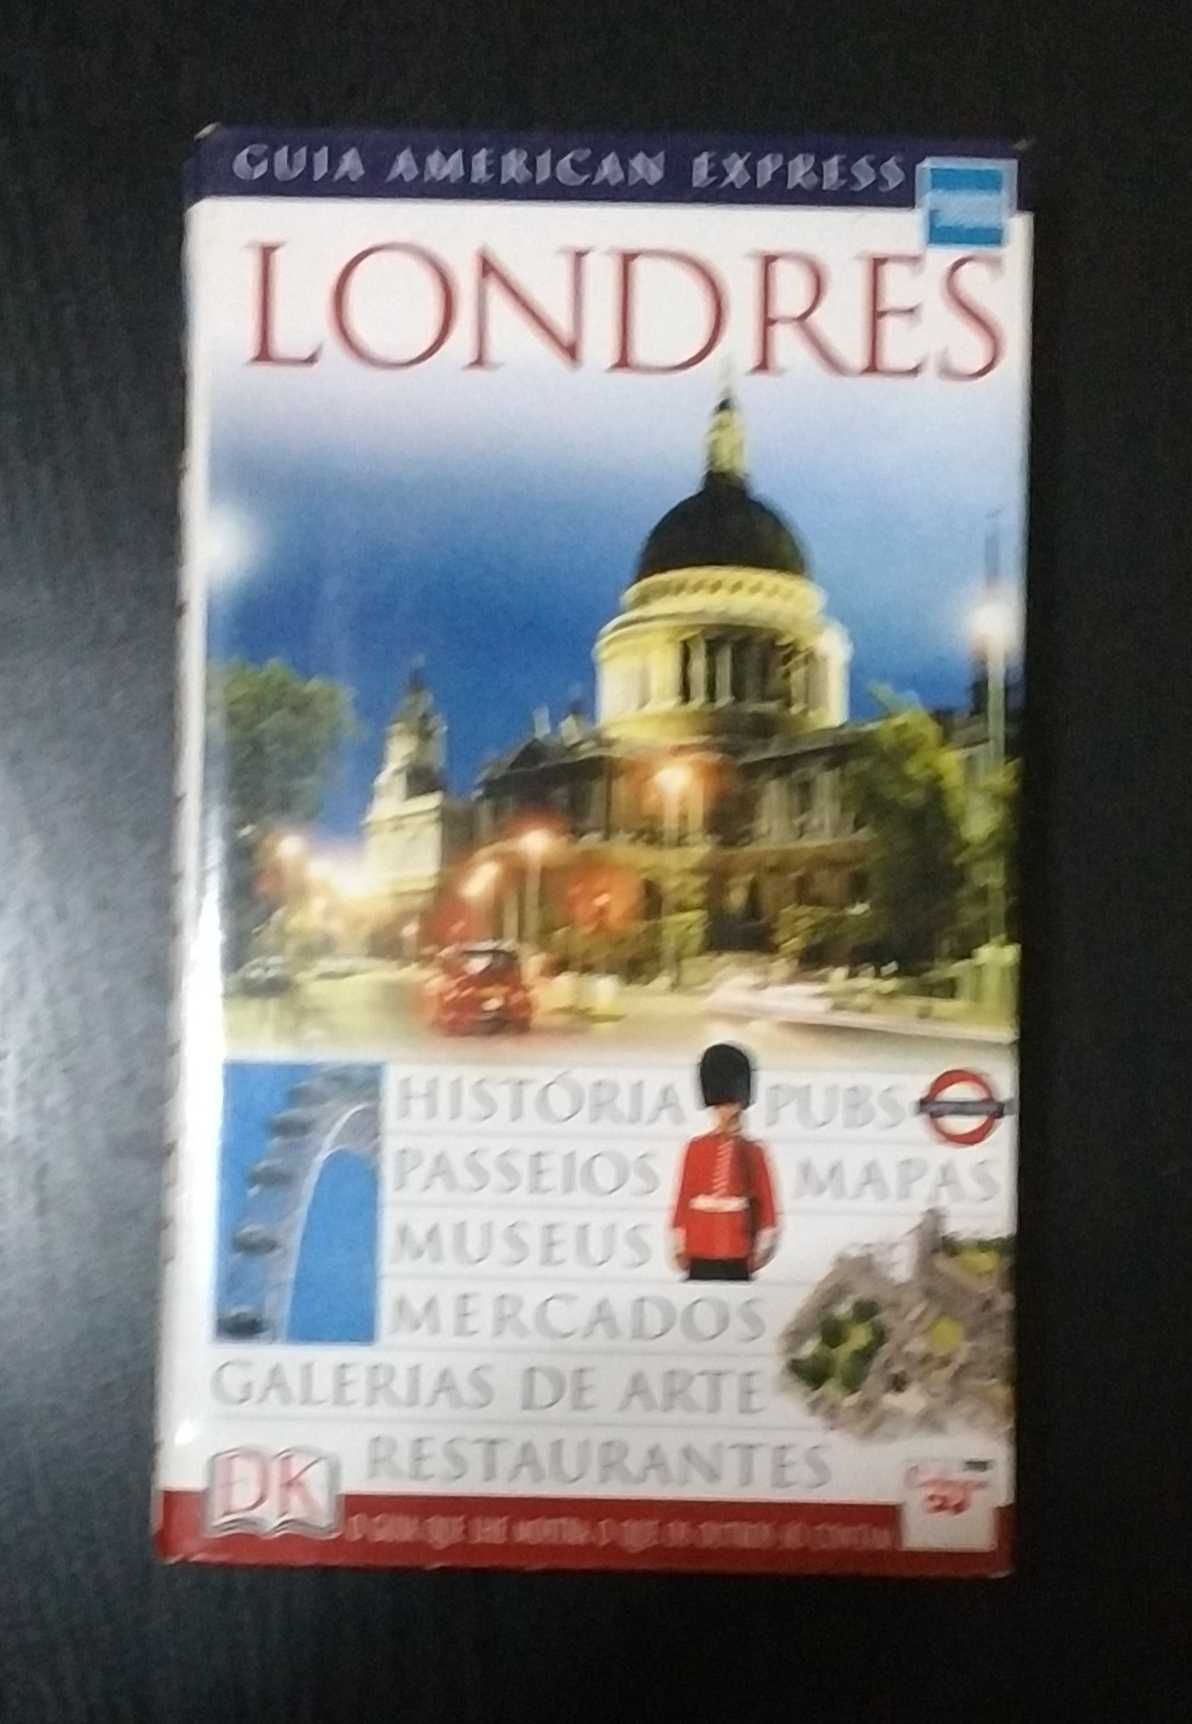 Guia American Express - Londres